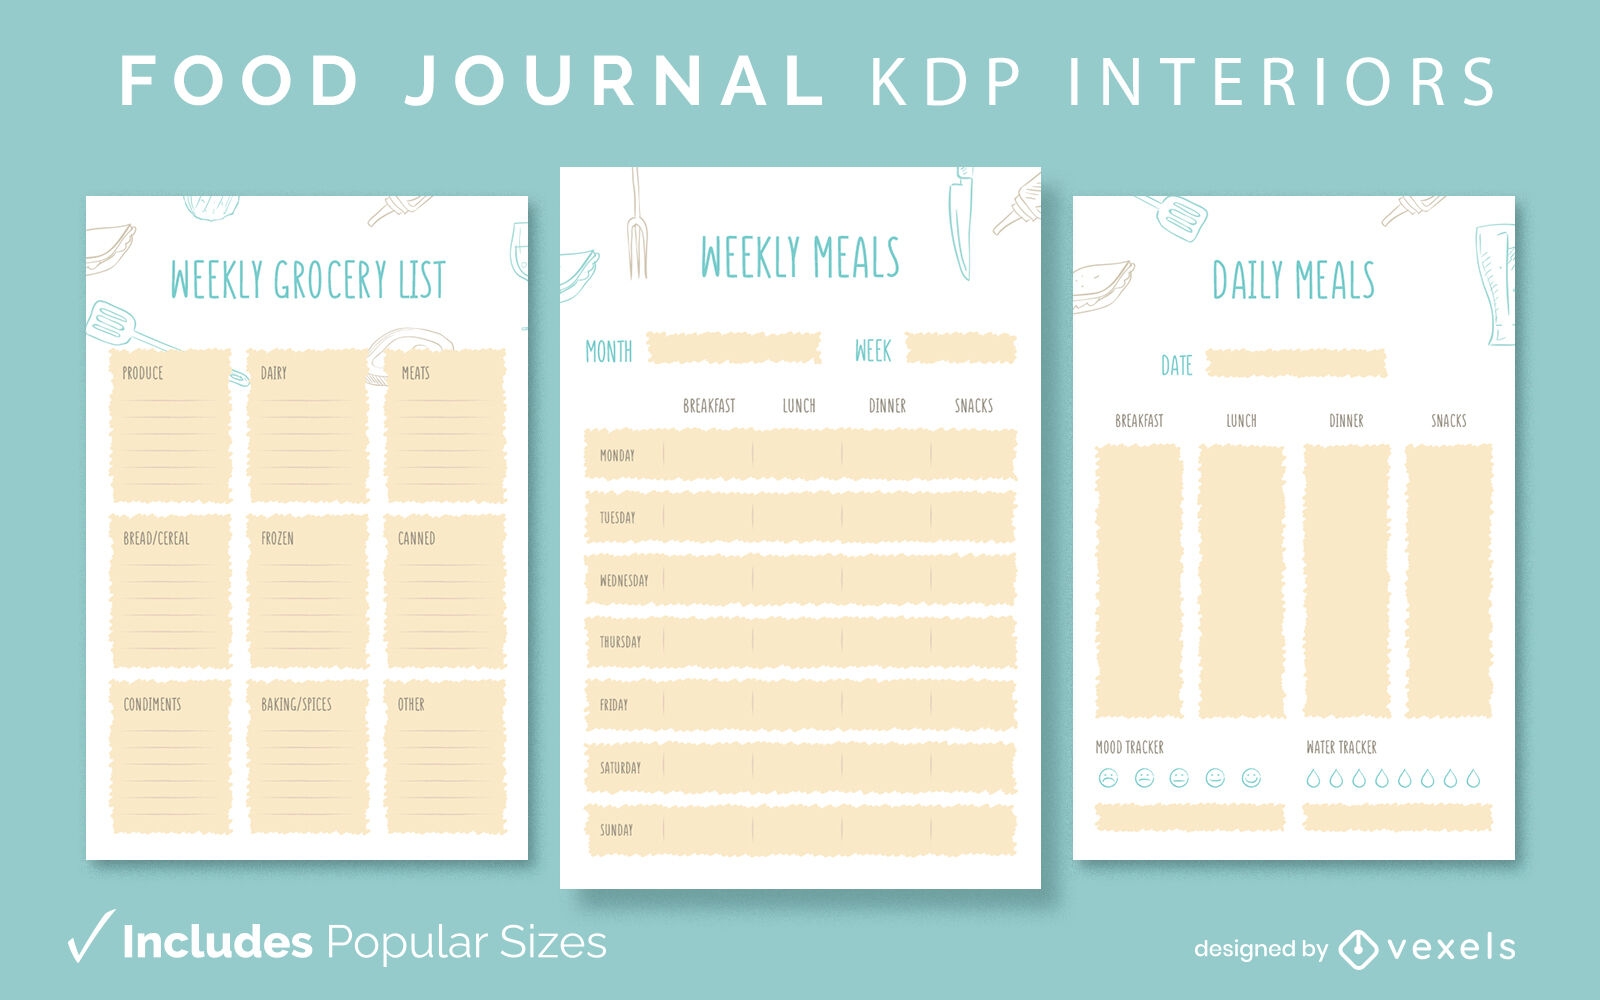 Awesome food journal KDP interior design